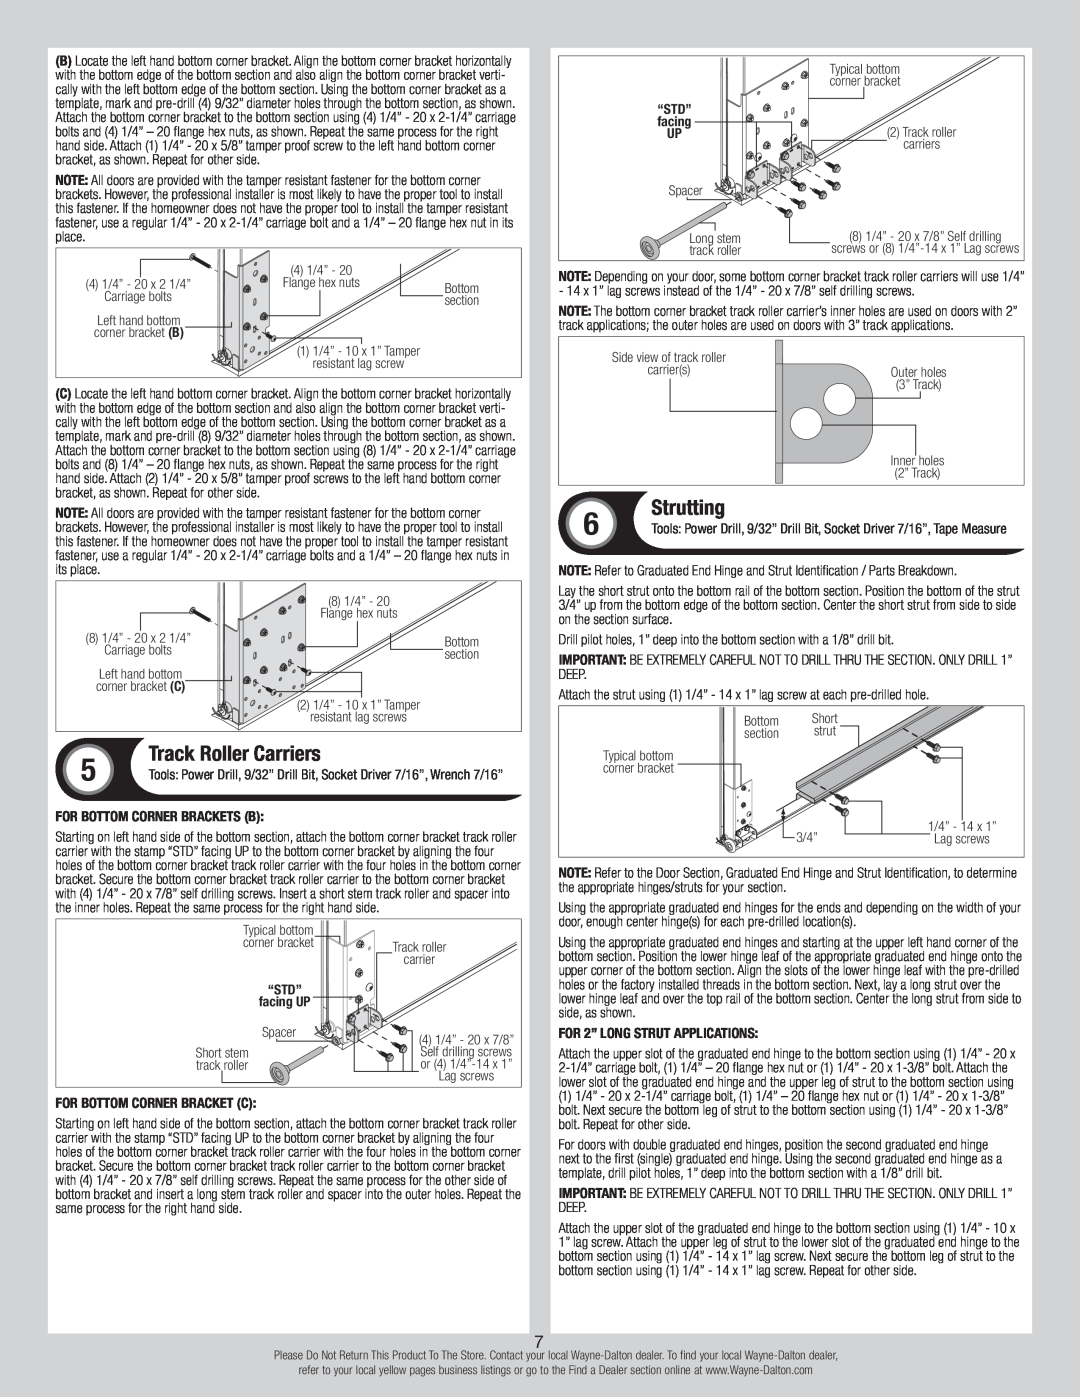 Wayne-Dalton 7100 Series installation instructions Track Roller Carriers, Strutting 